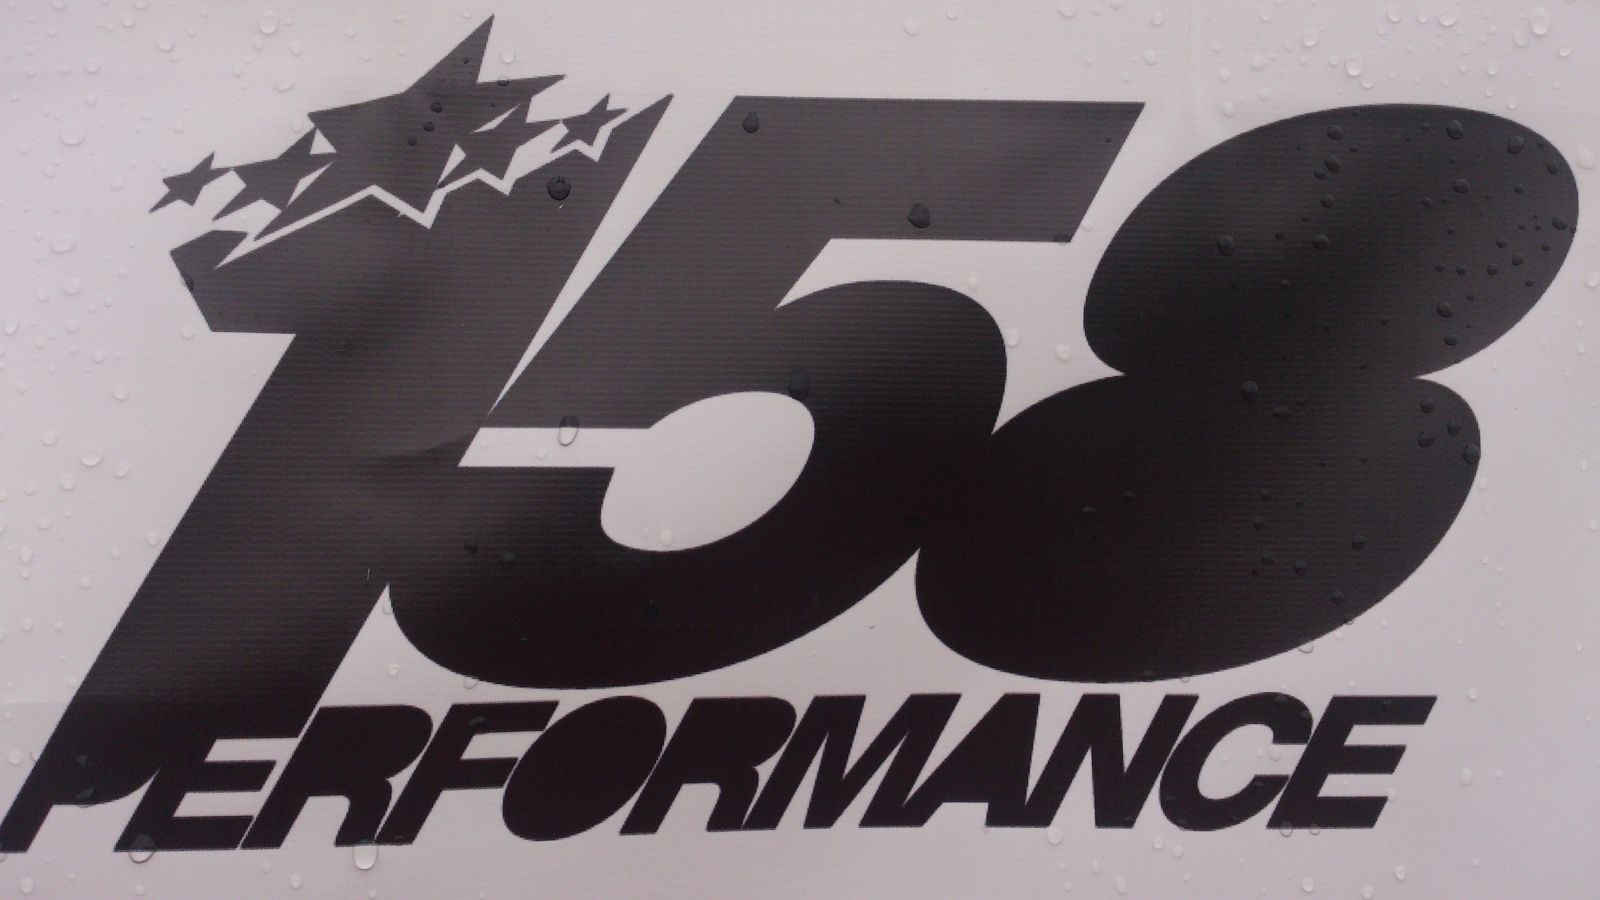 158 Performance Ltd